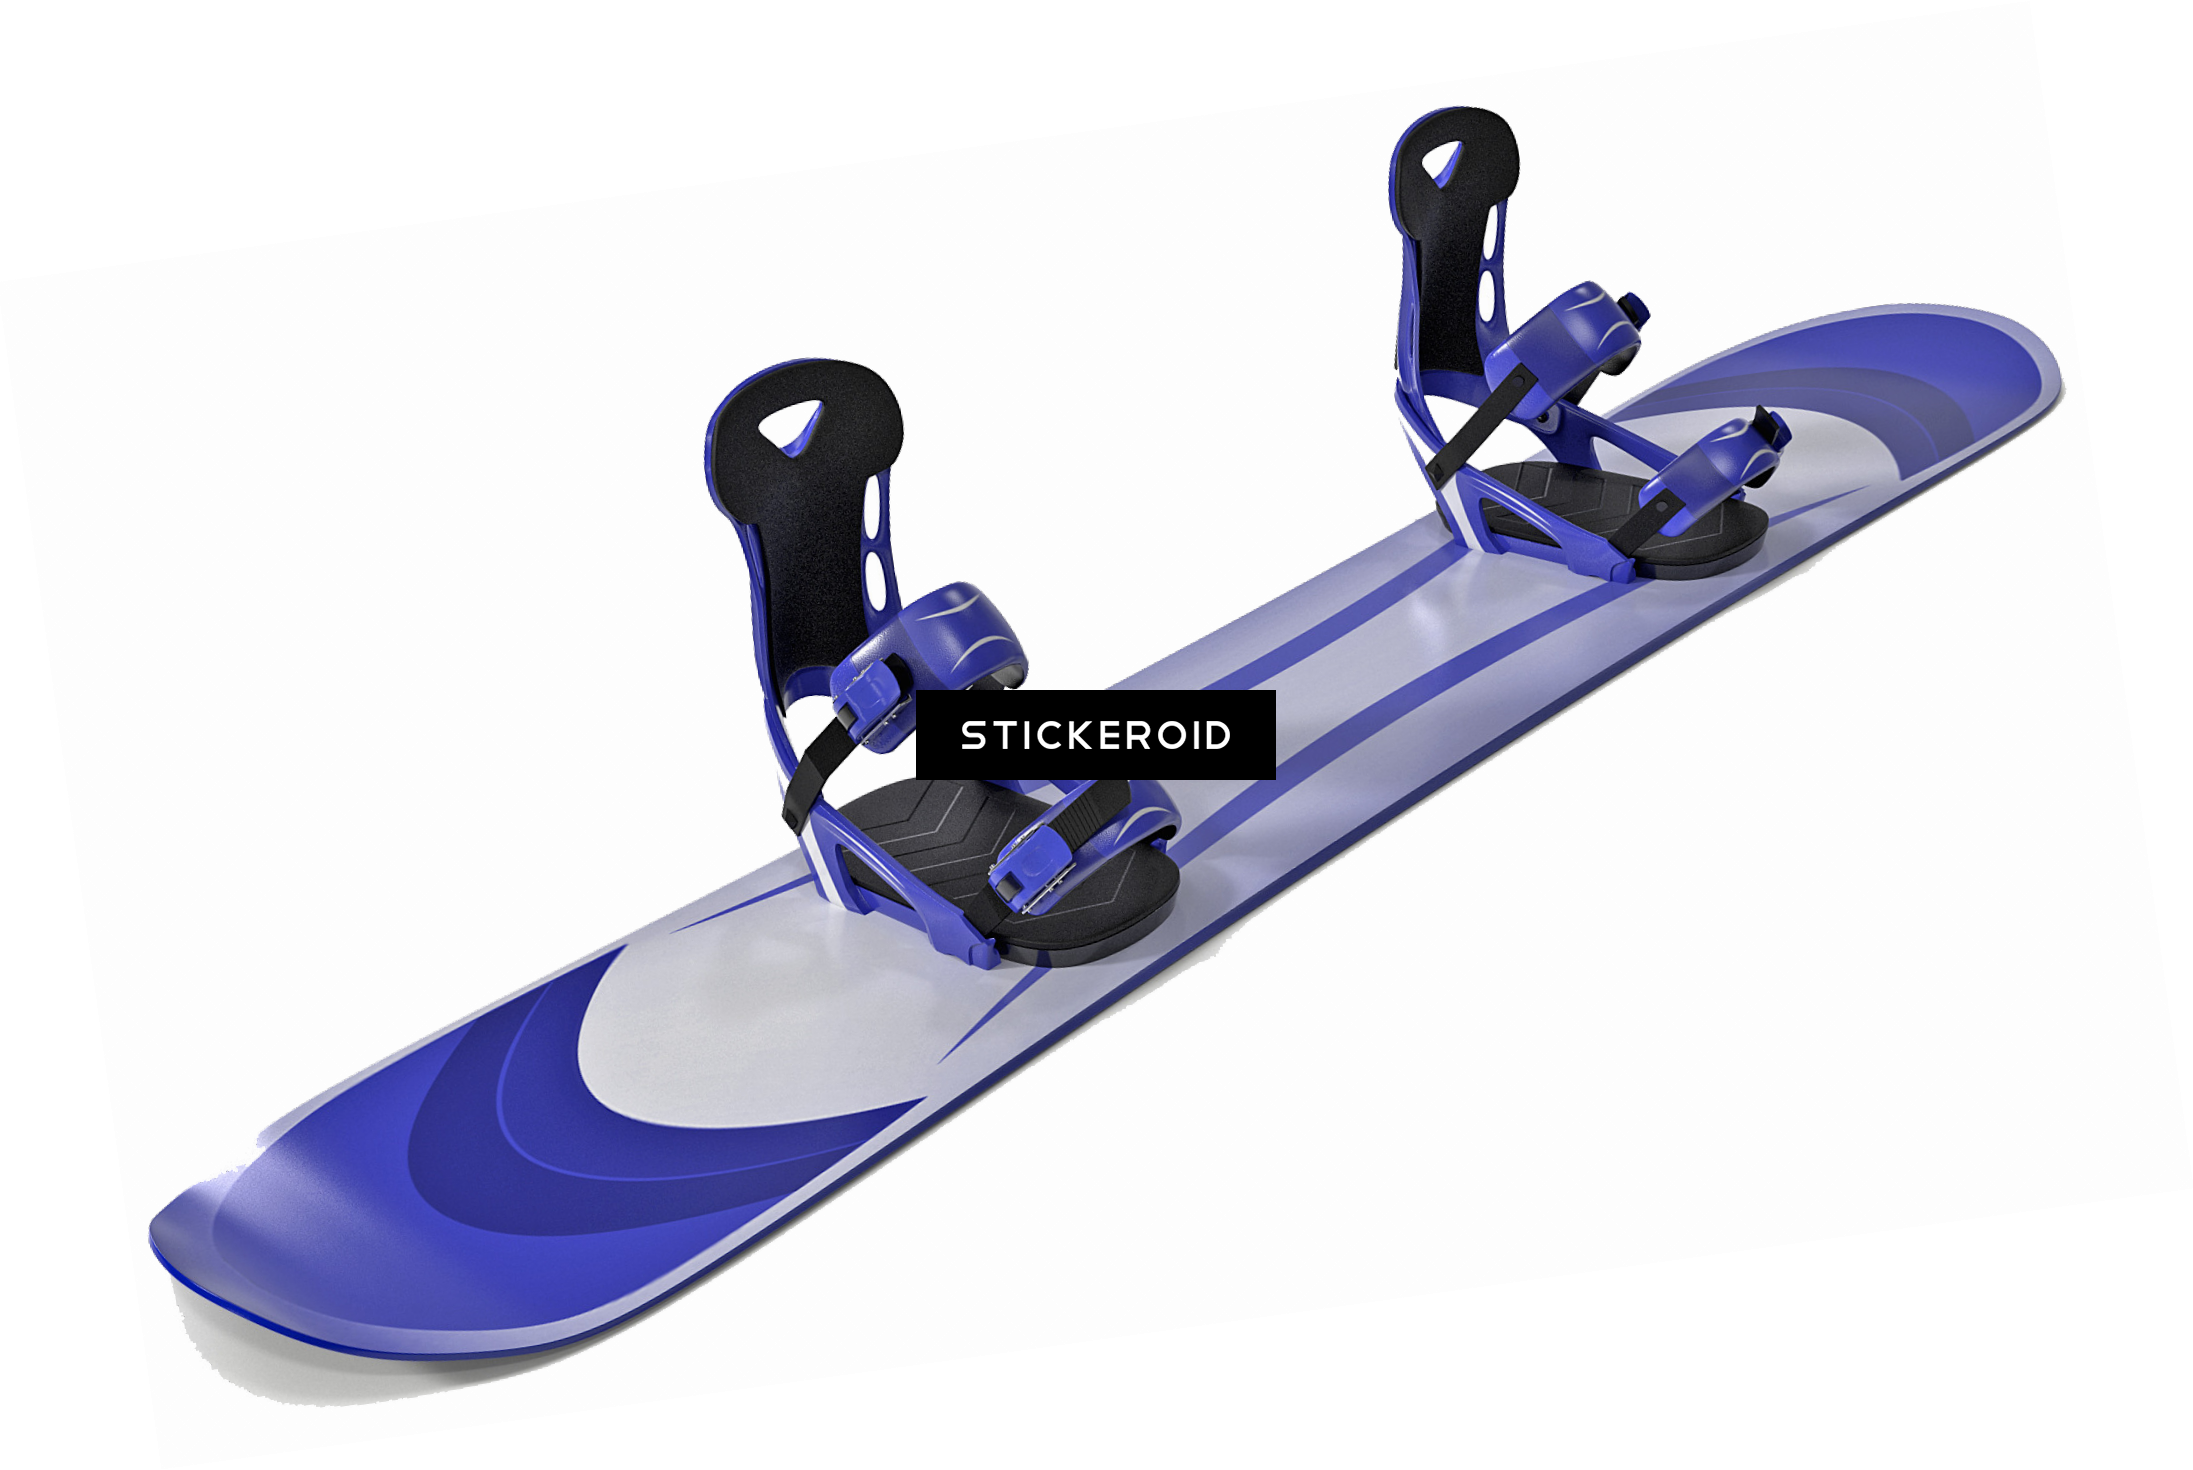 Snowboard - Snowboard (2193x1470)